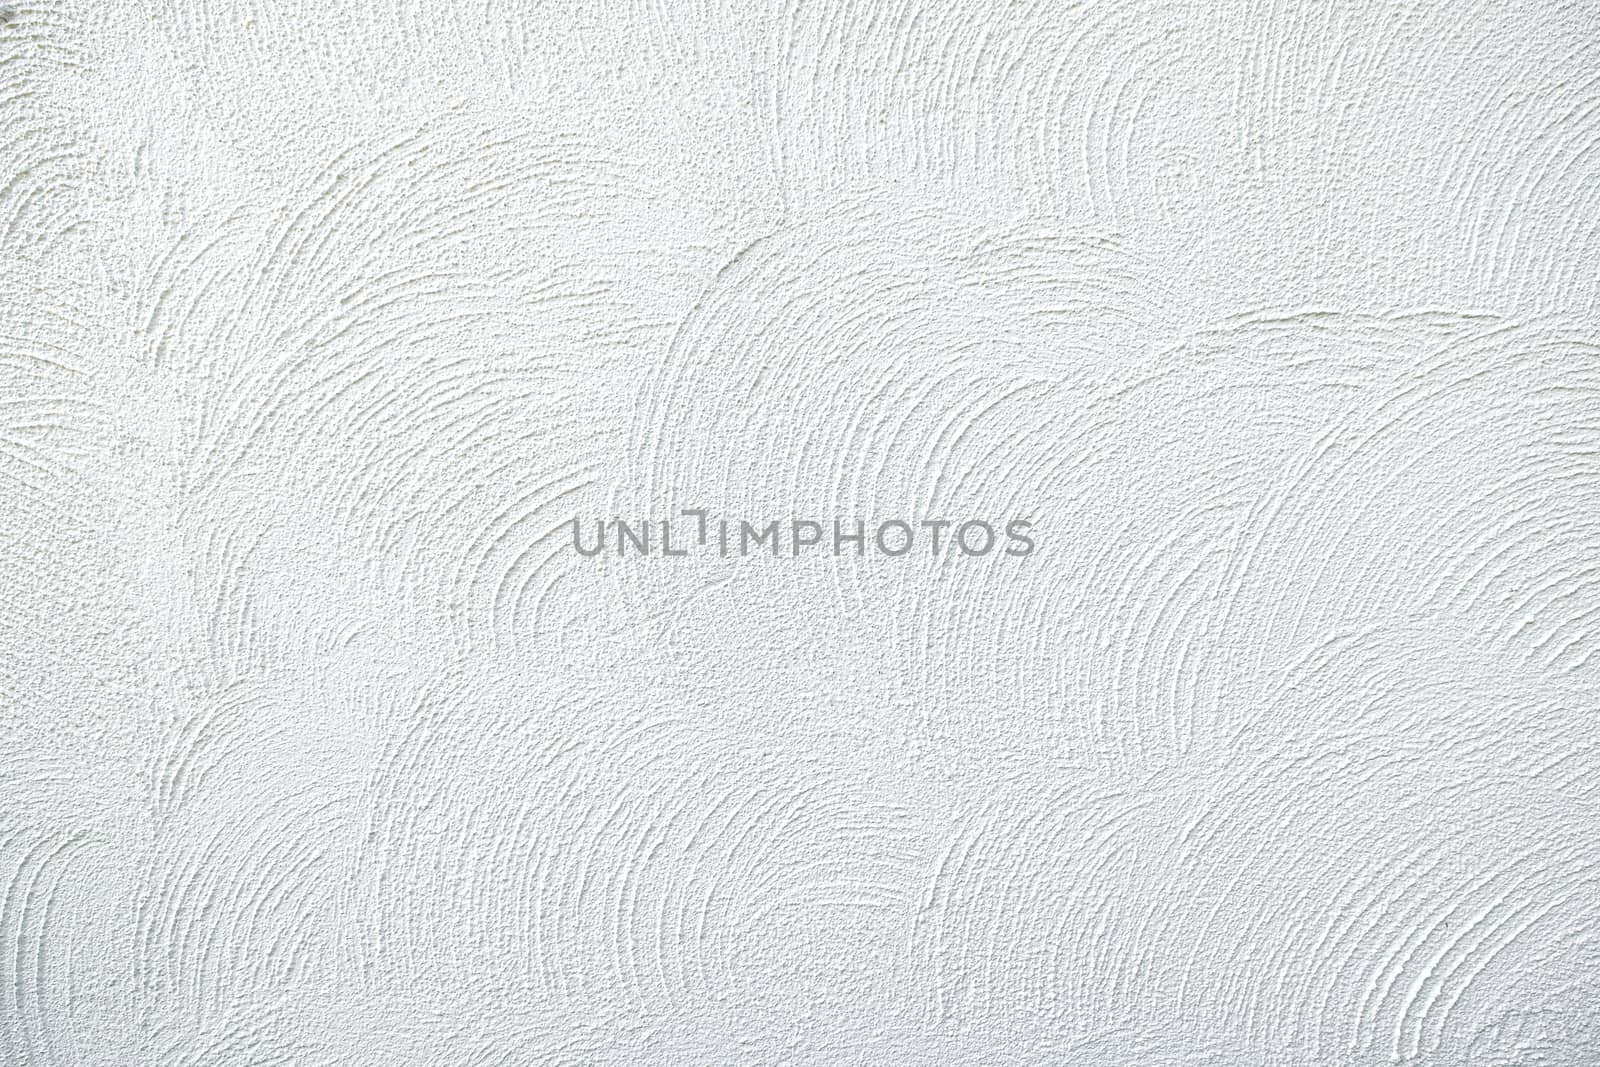 White plaster textured background.